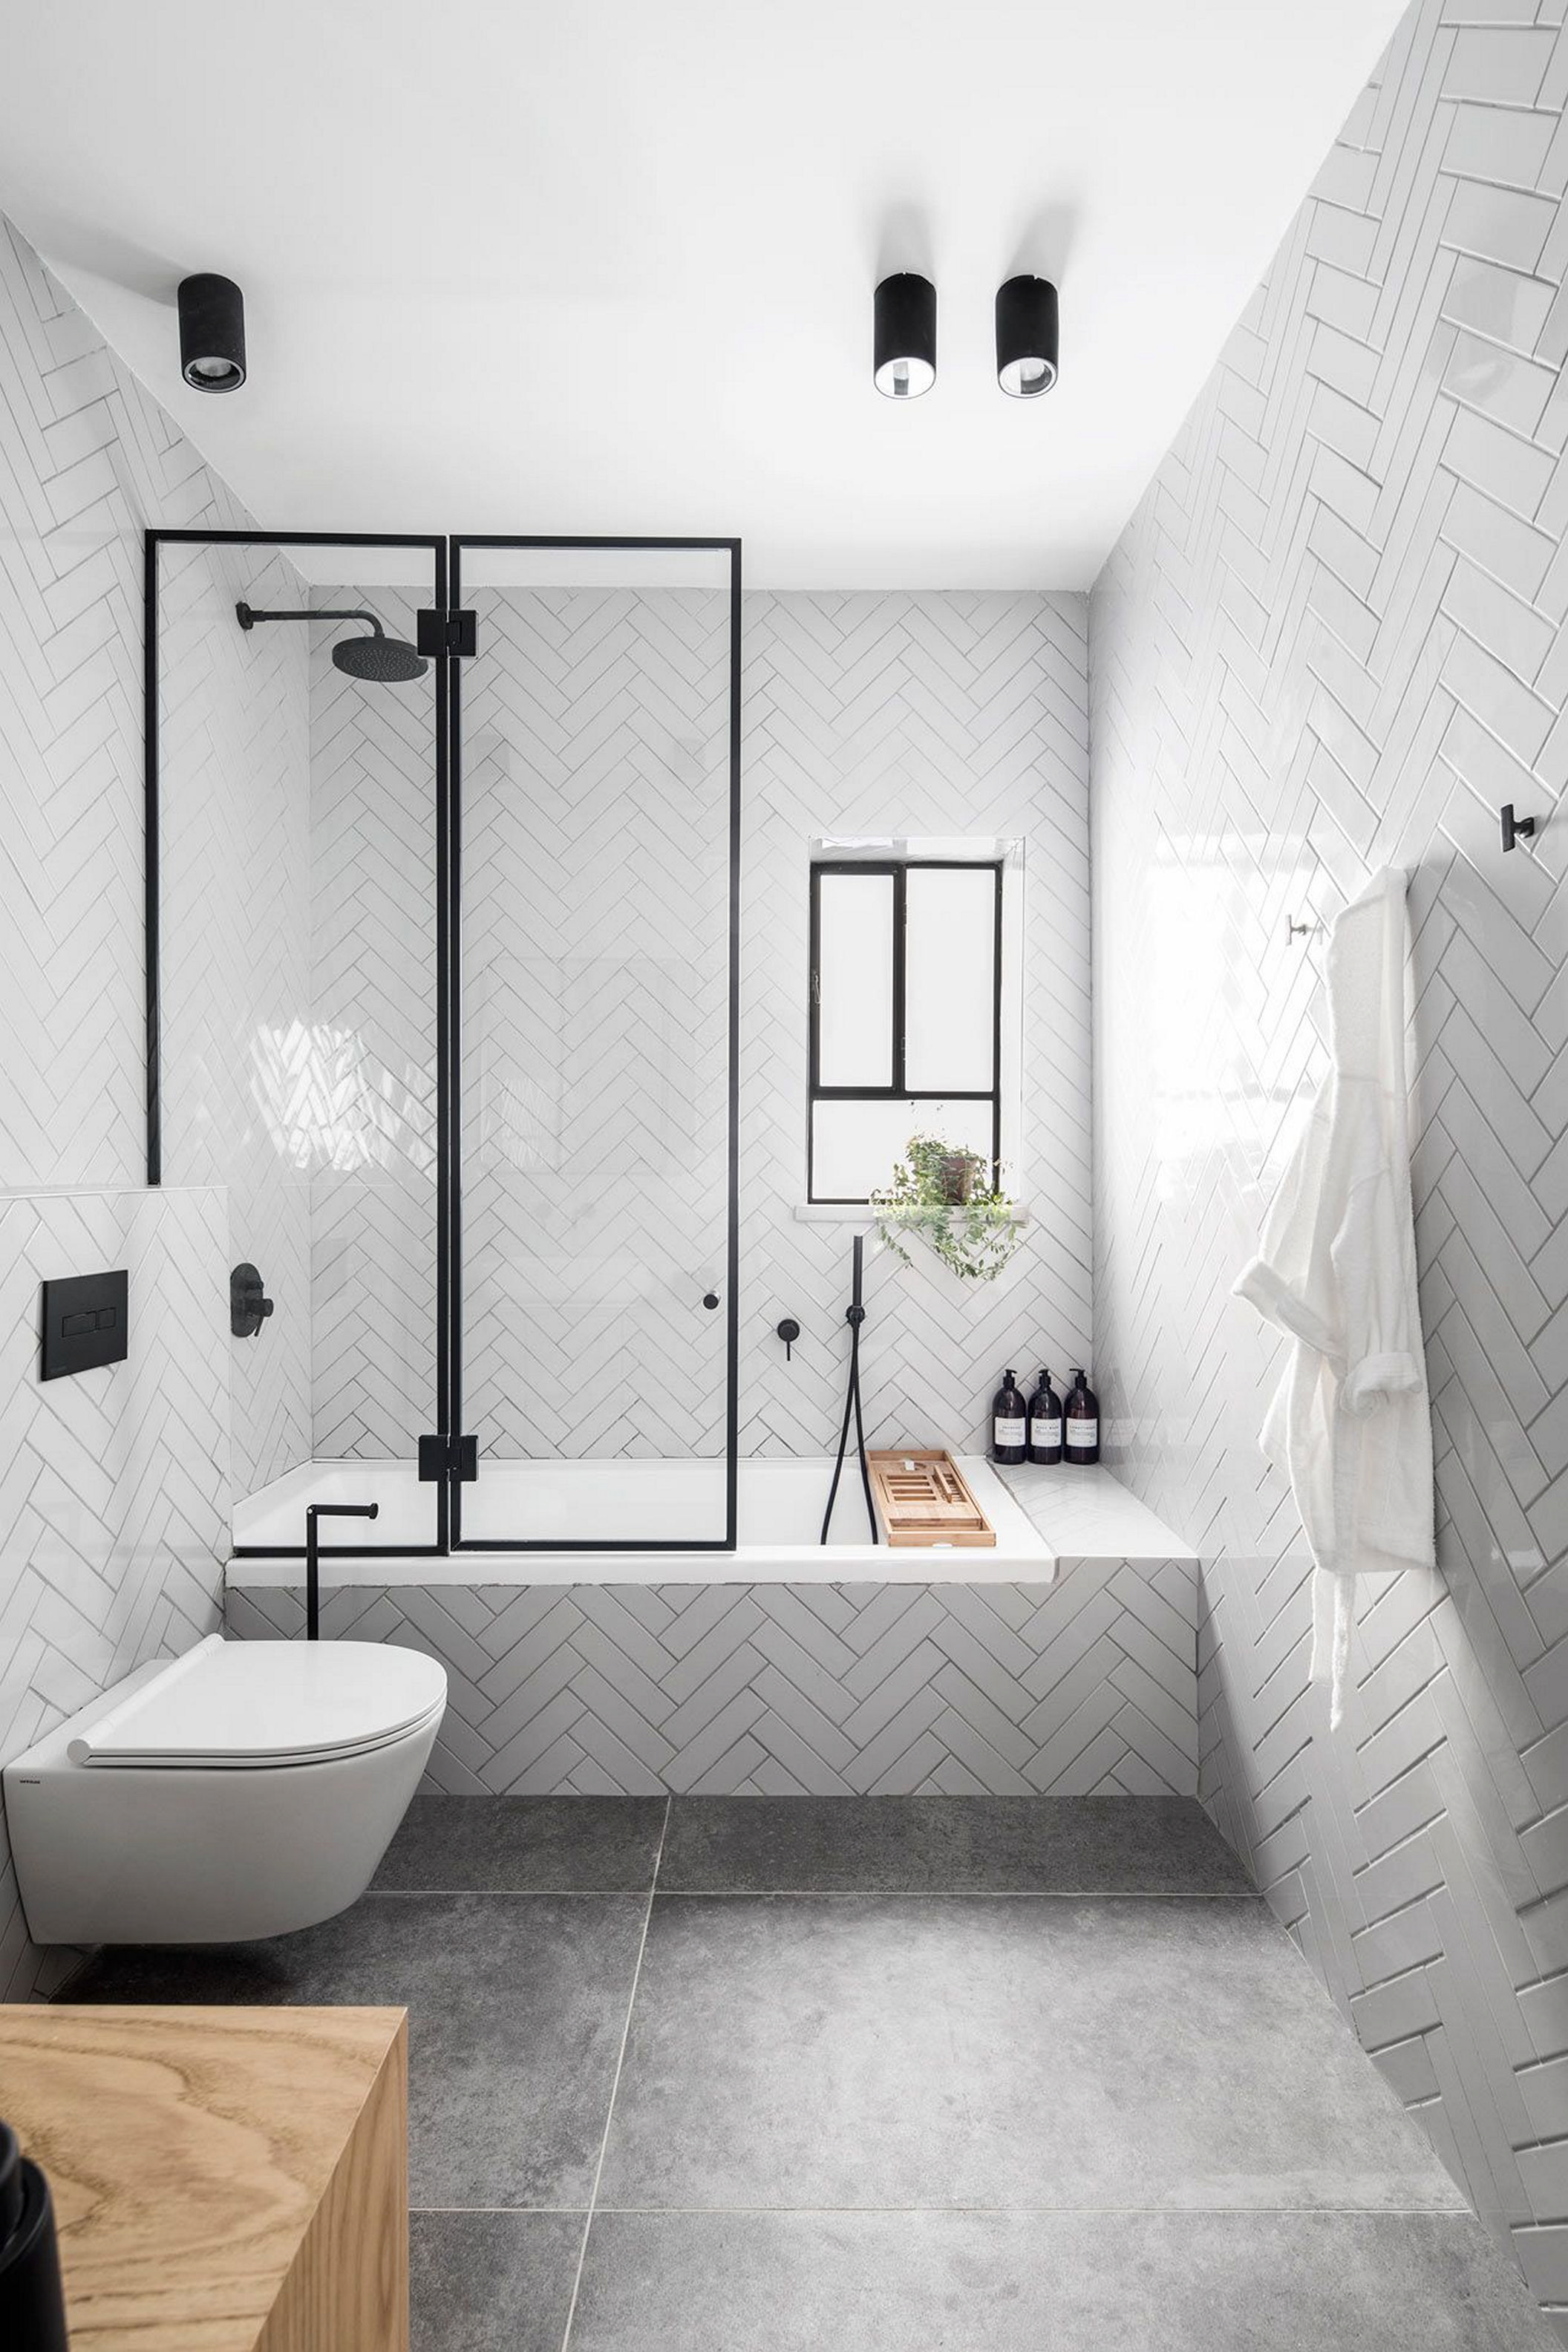 Small bathroom ideas during bathroom remodeling Tip Heat your bathroom tile 1